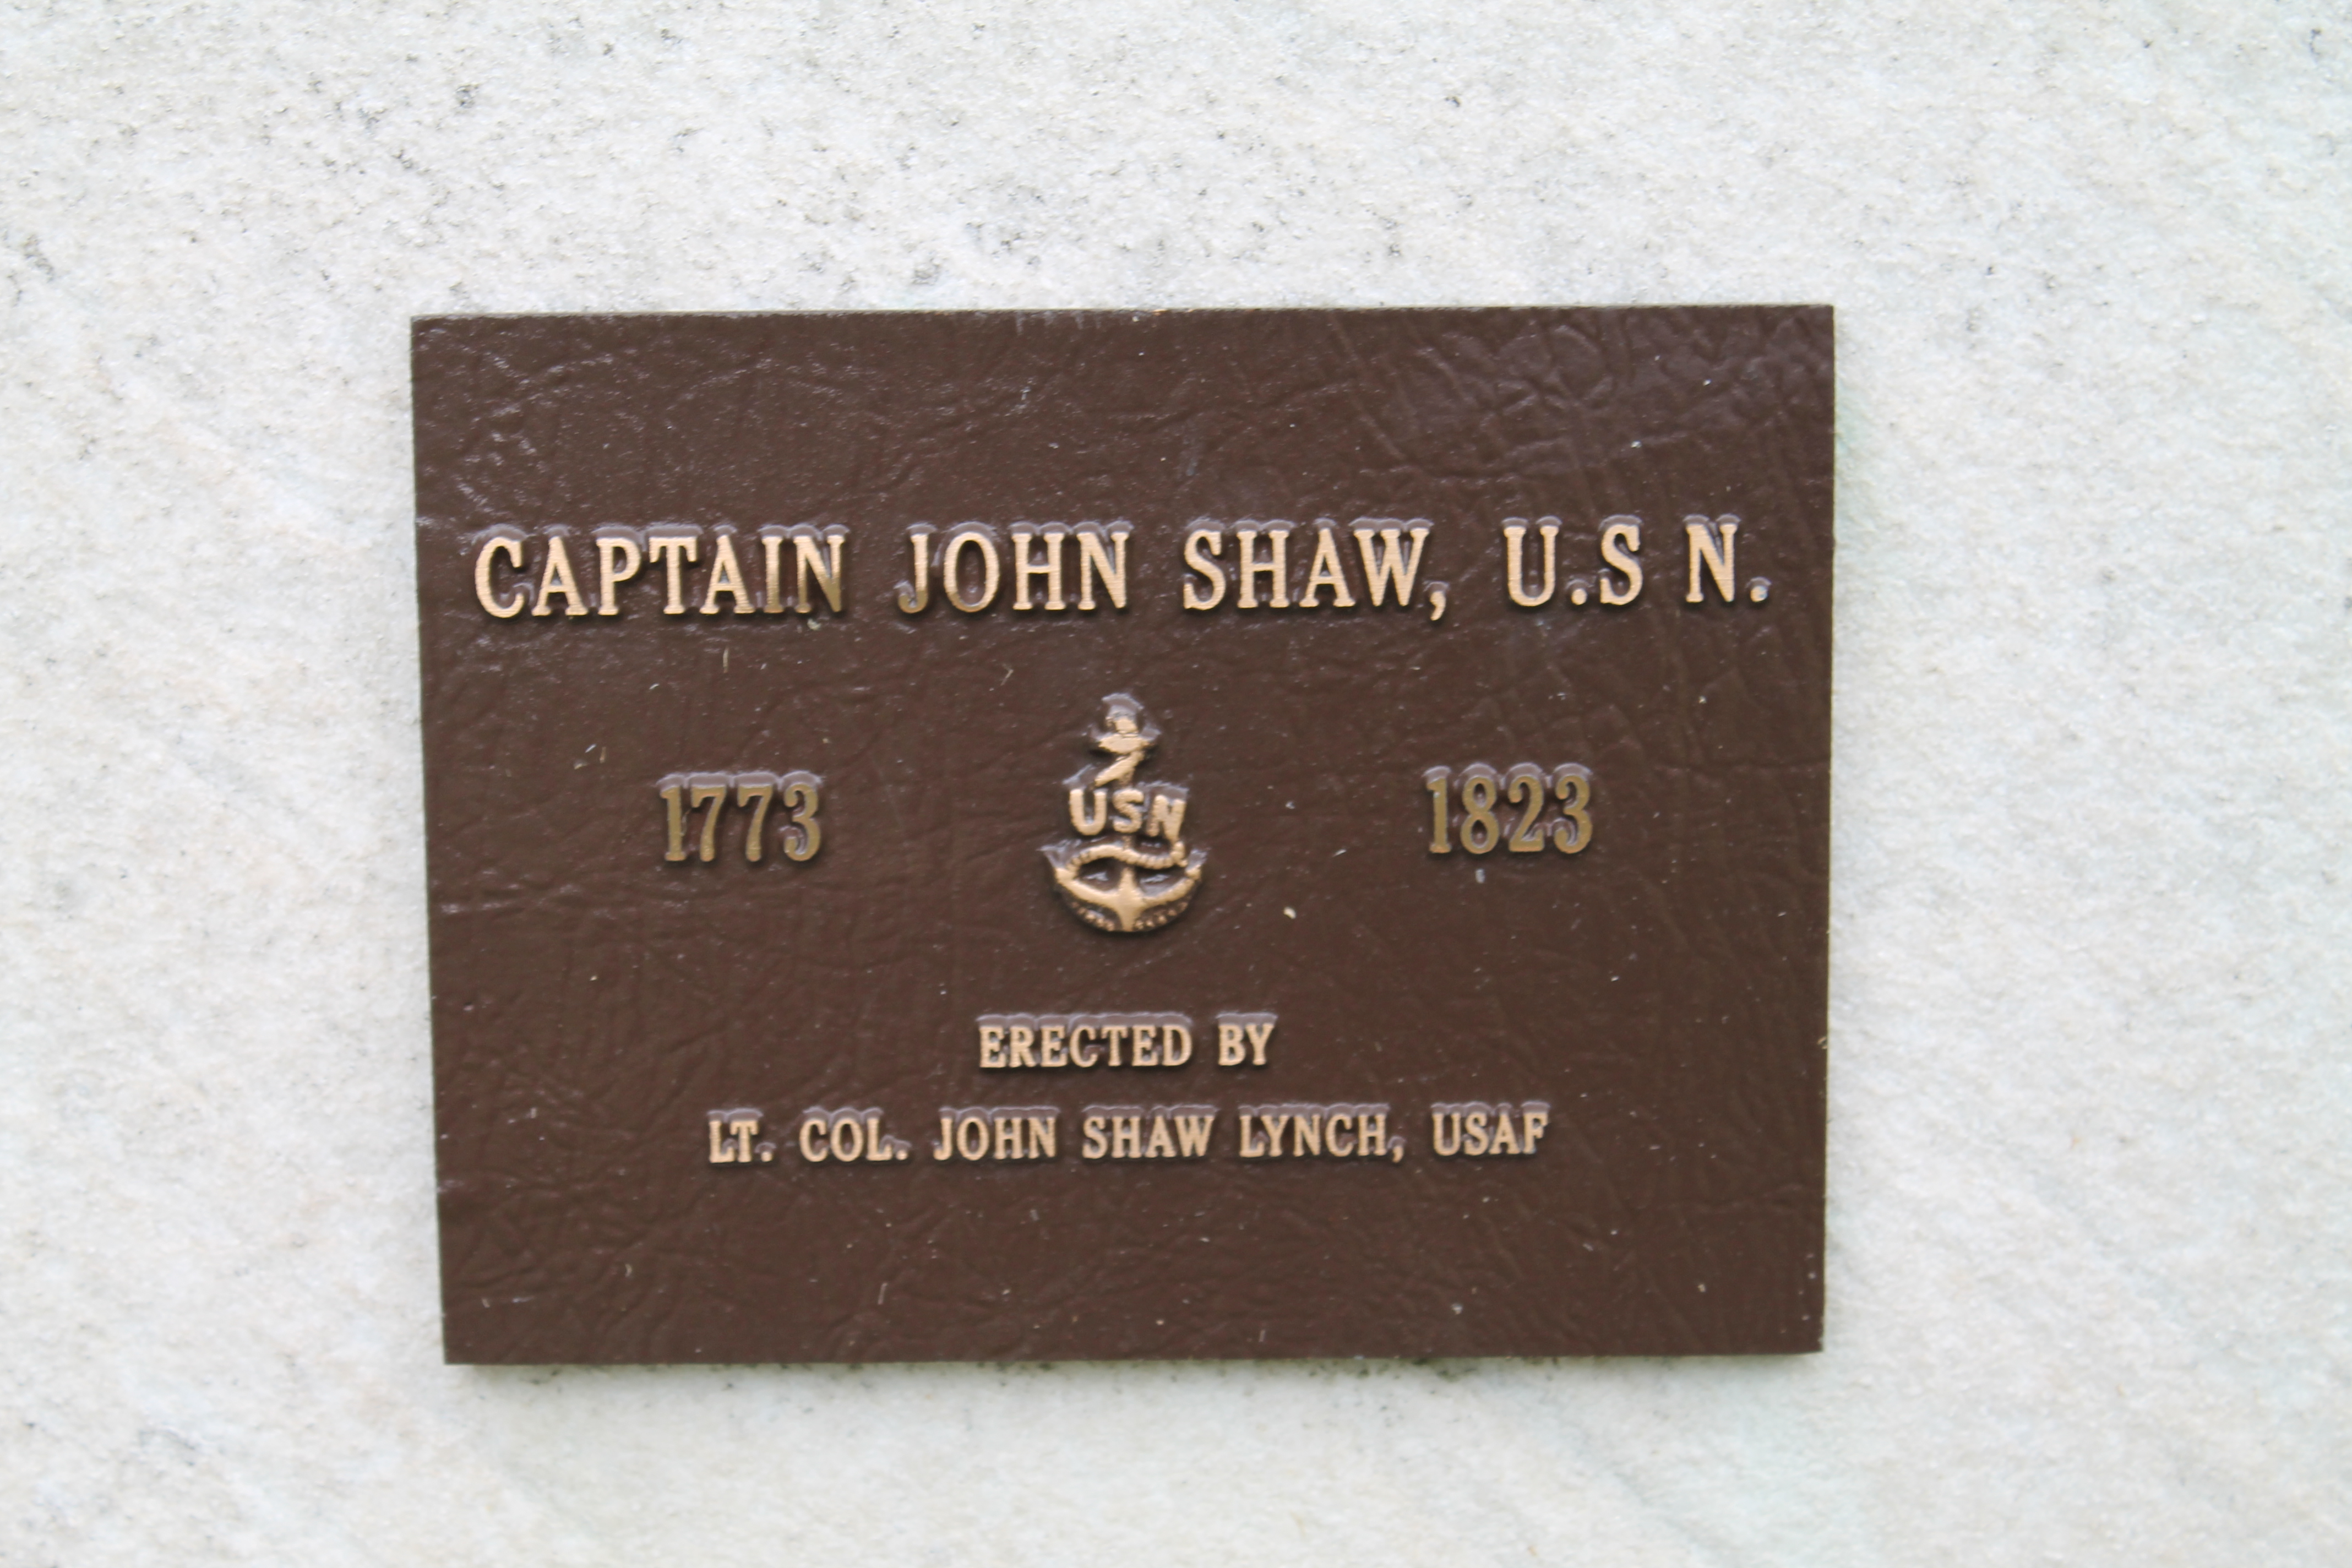 Plaque at the Philadelphia gave of Captain John Shaw. (Photo: Pattie Crider / girlboxer1970.com)